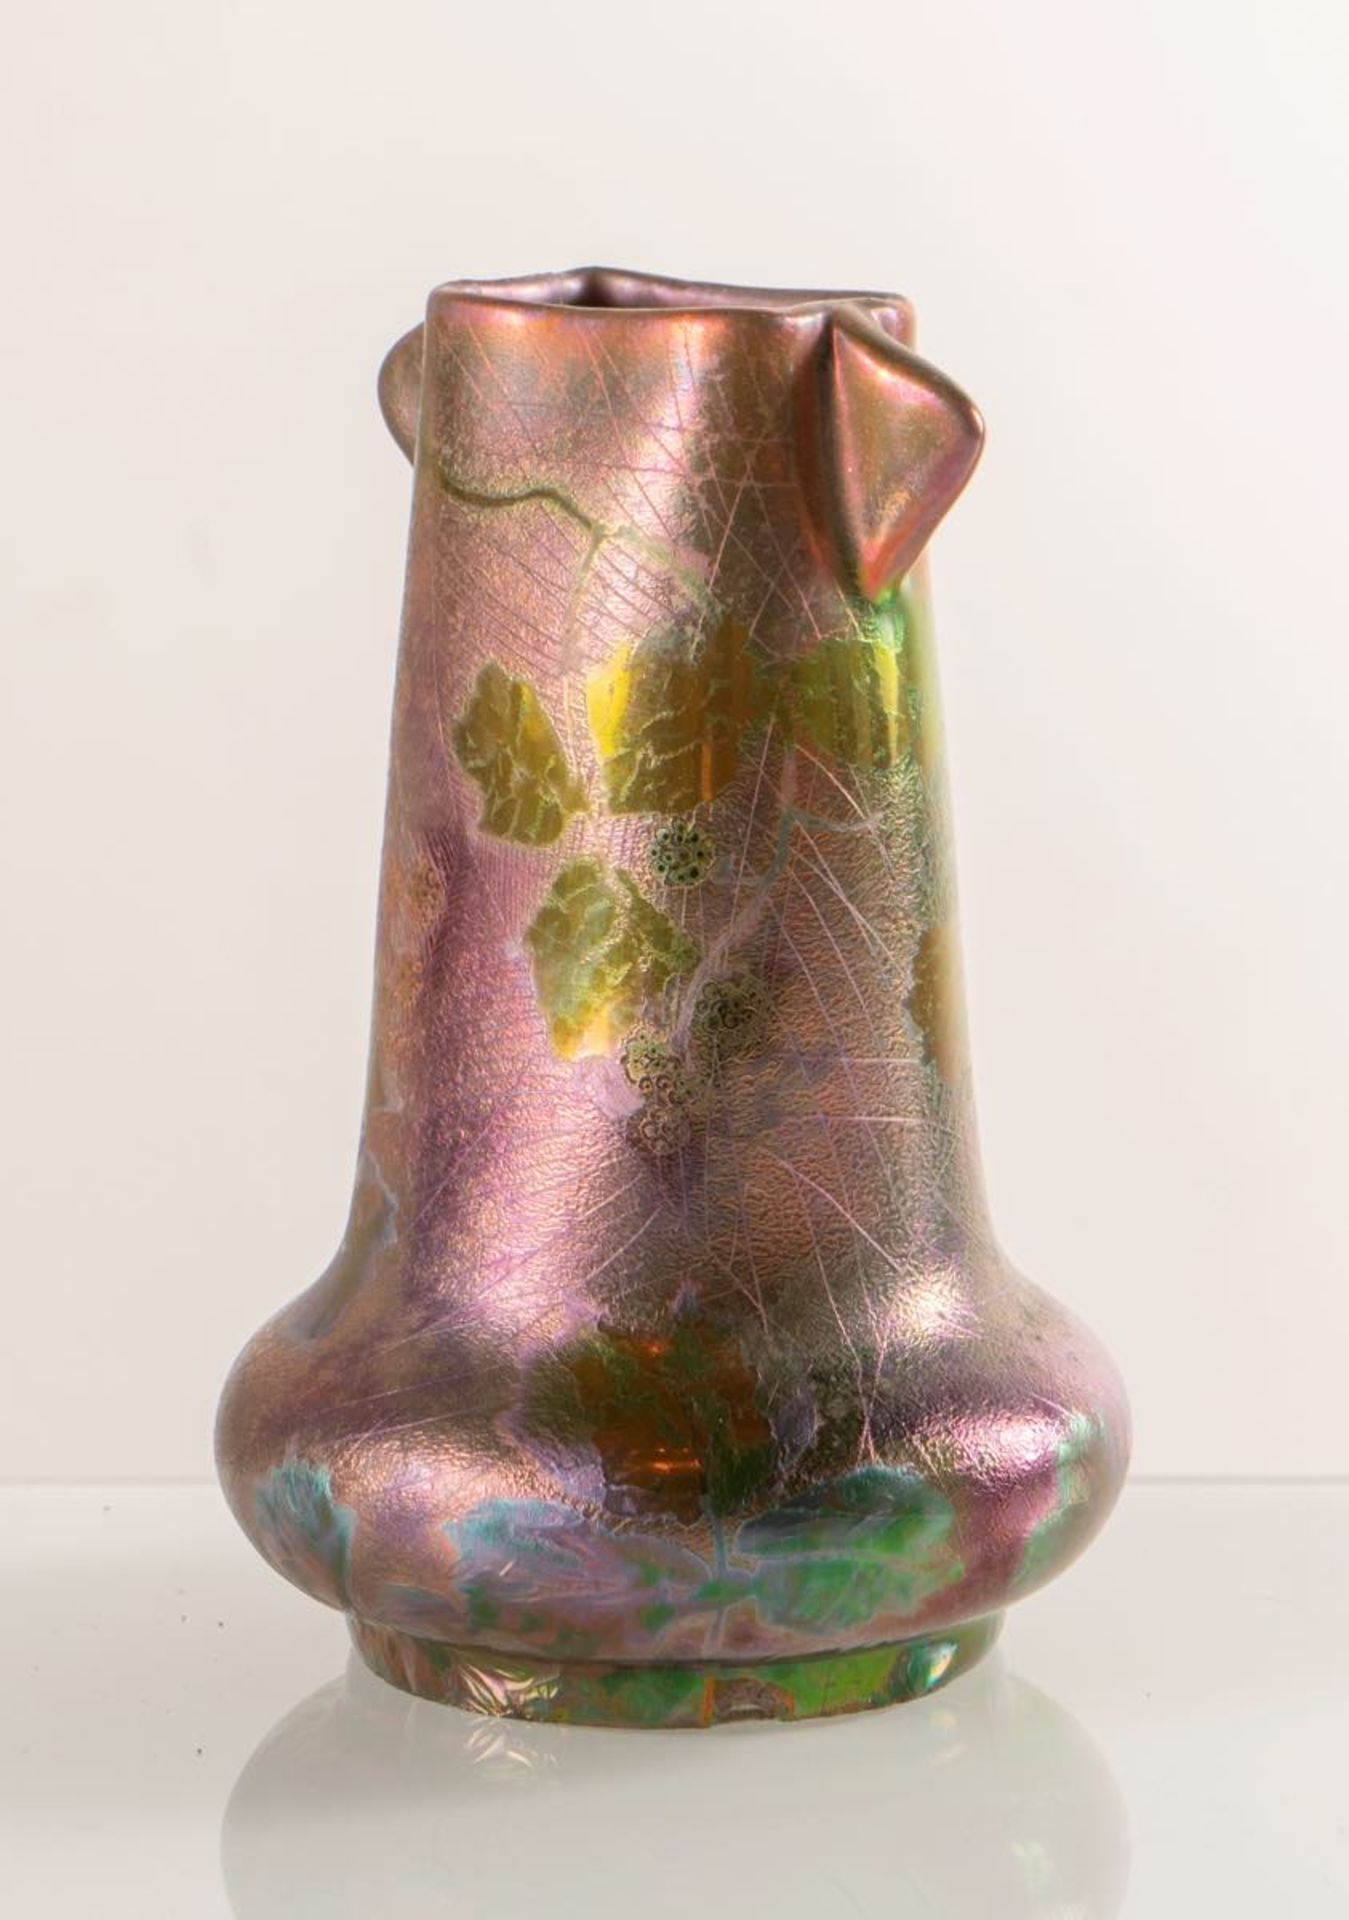 Clément Massier, Vaso piriforme in ceramica con collo schiacciato, 1890 - 1910.Imboccatura - Bild 2 aus 3